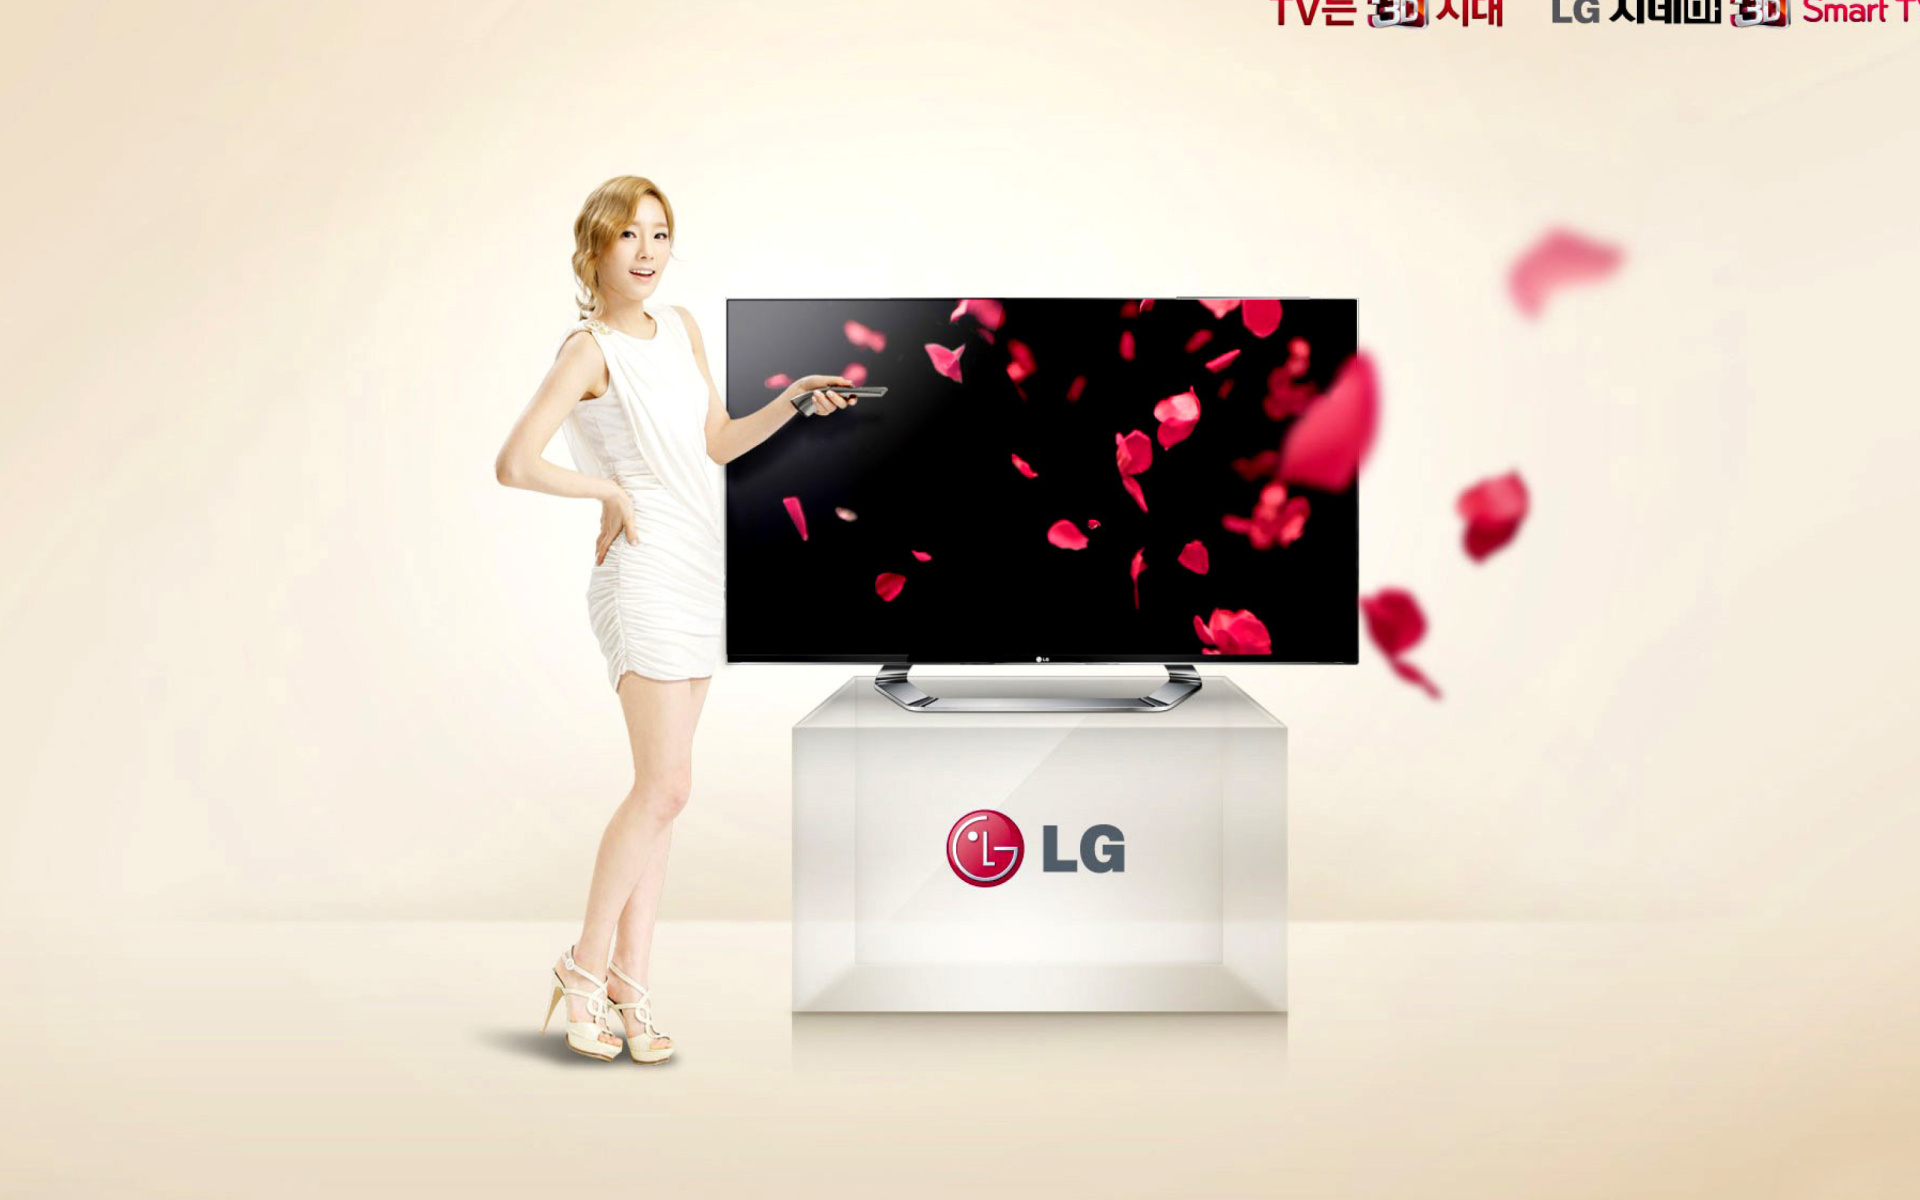 LG Smart TV wallpaper 1920x1200